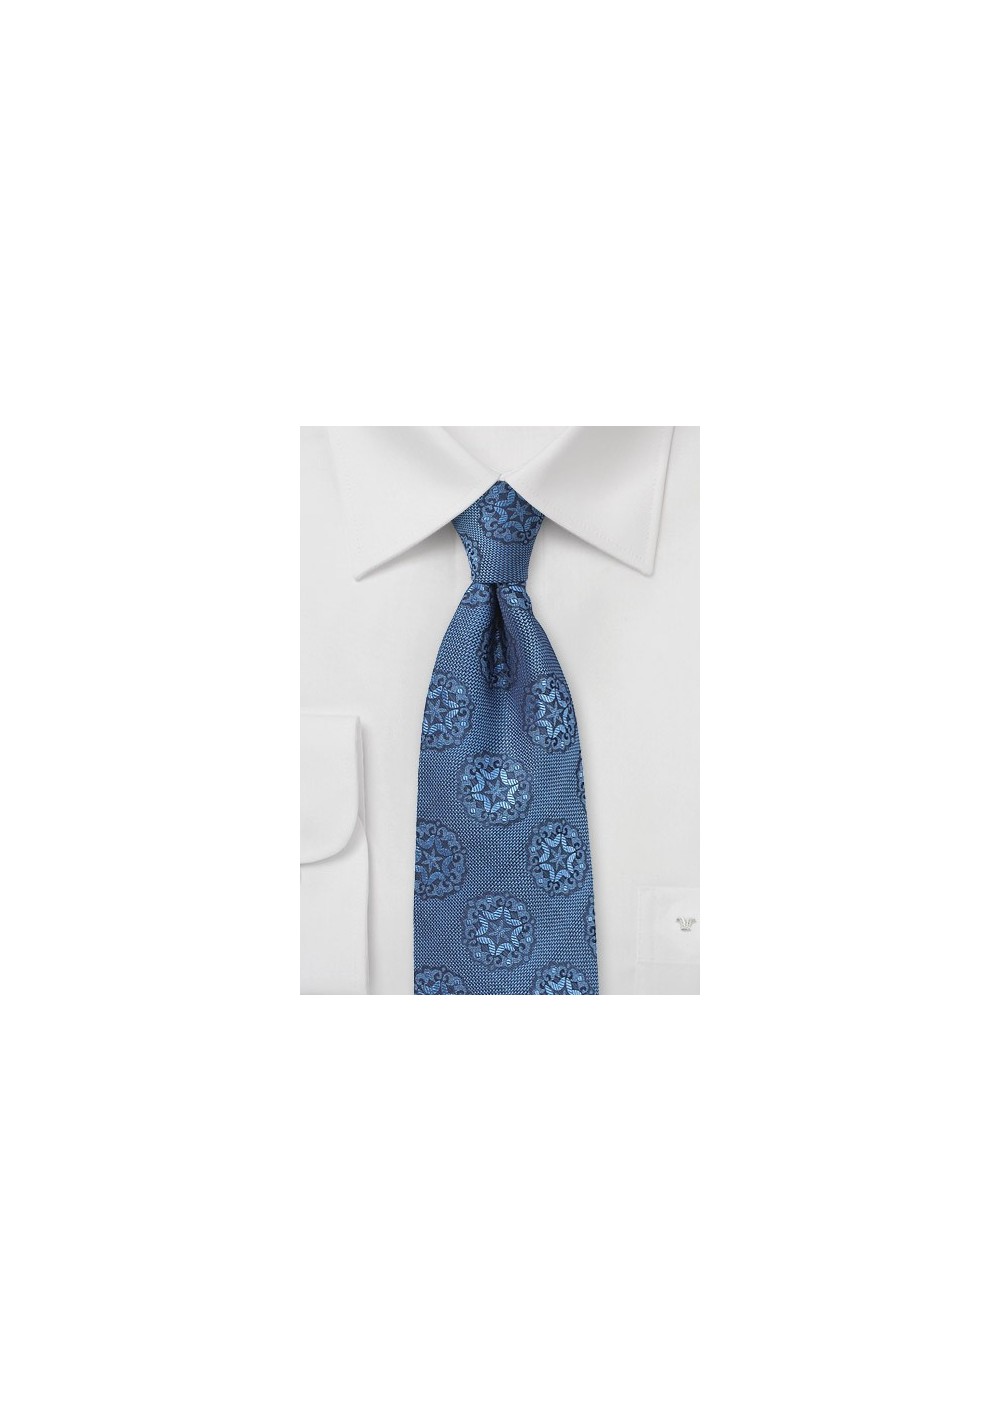 Indigo Blue Woven Medallion Print Tie